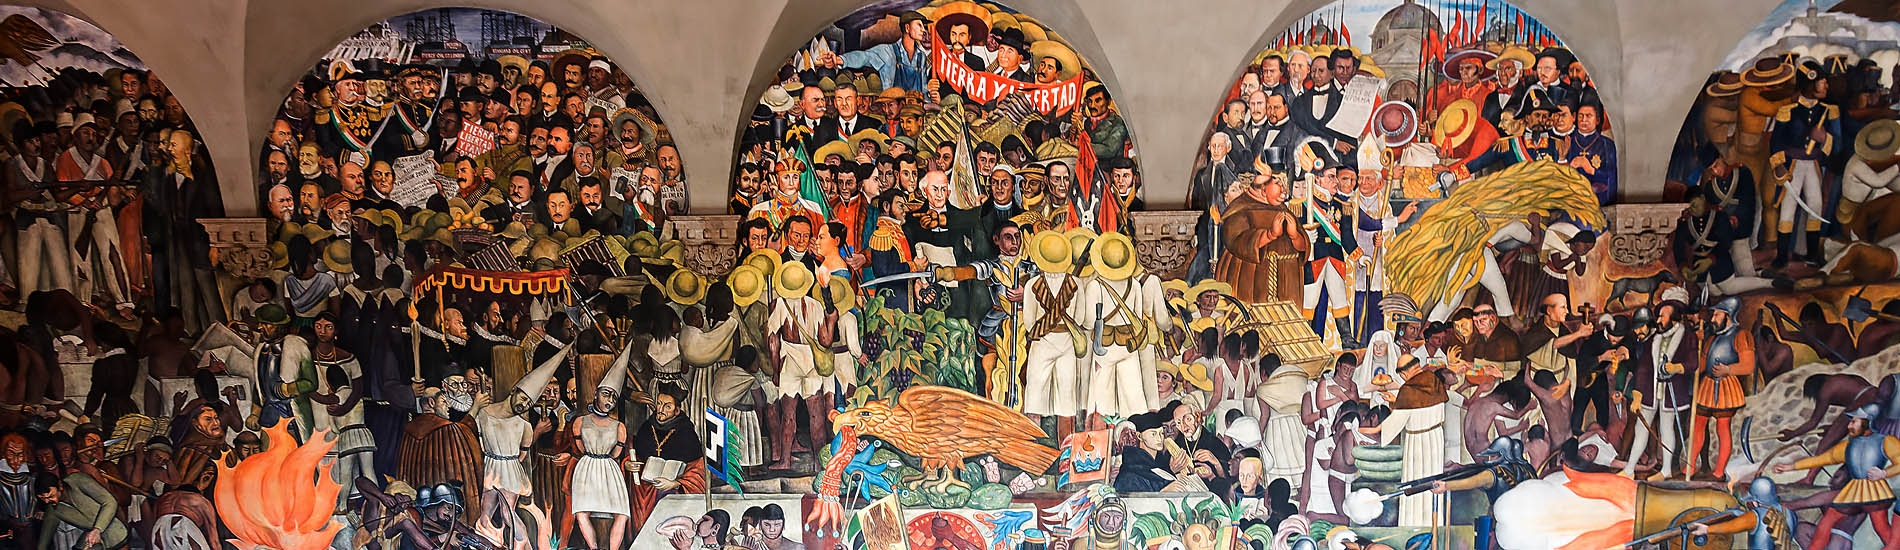 Diego Rivera fresco mural - National Palace